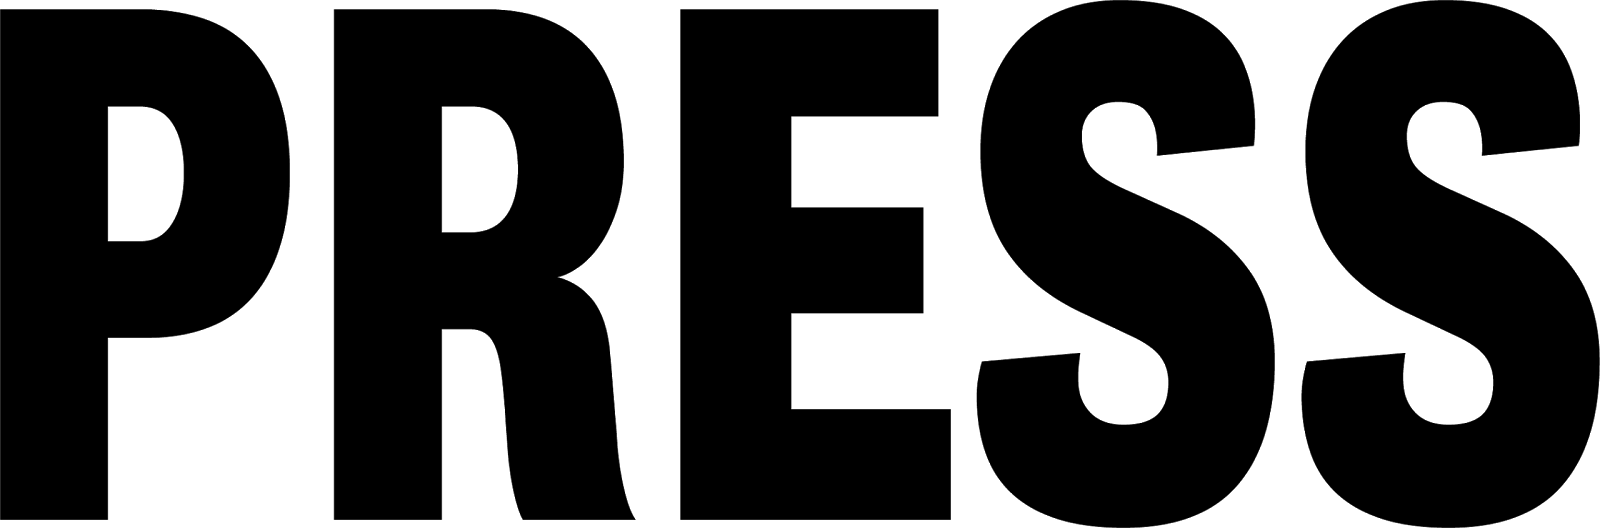 Clampdown On Press - Journalist Press Logo (1600x528)